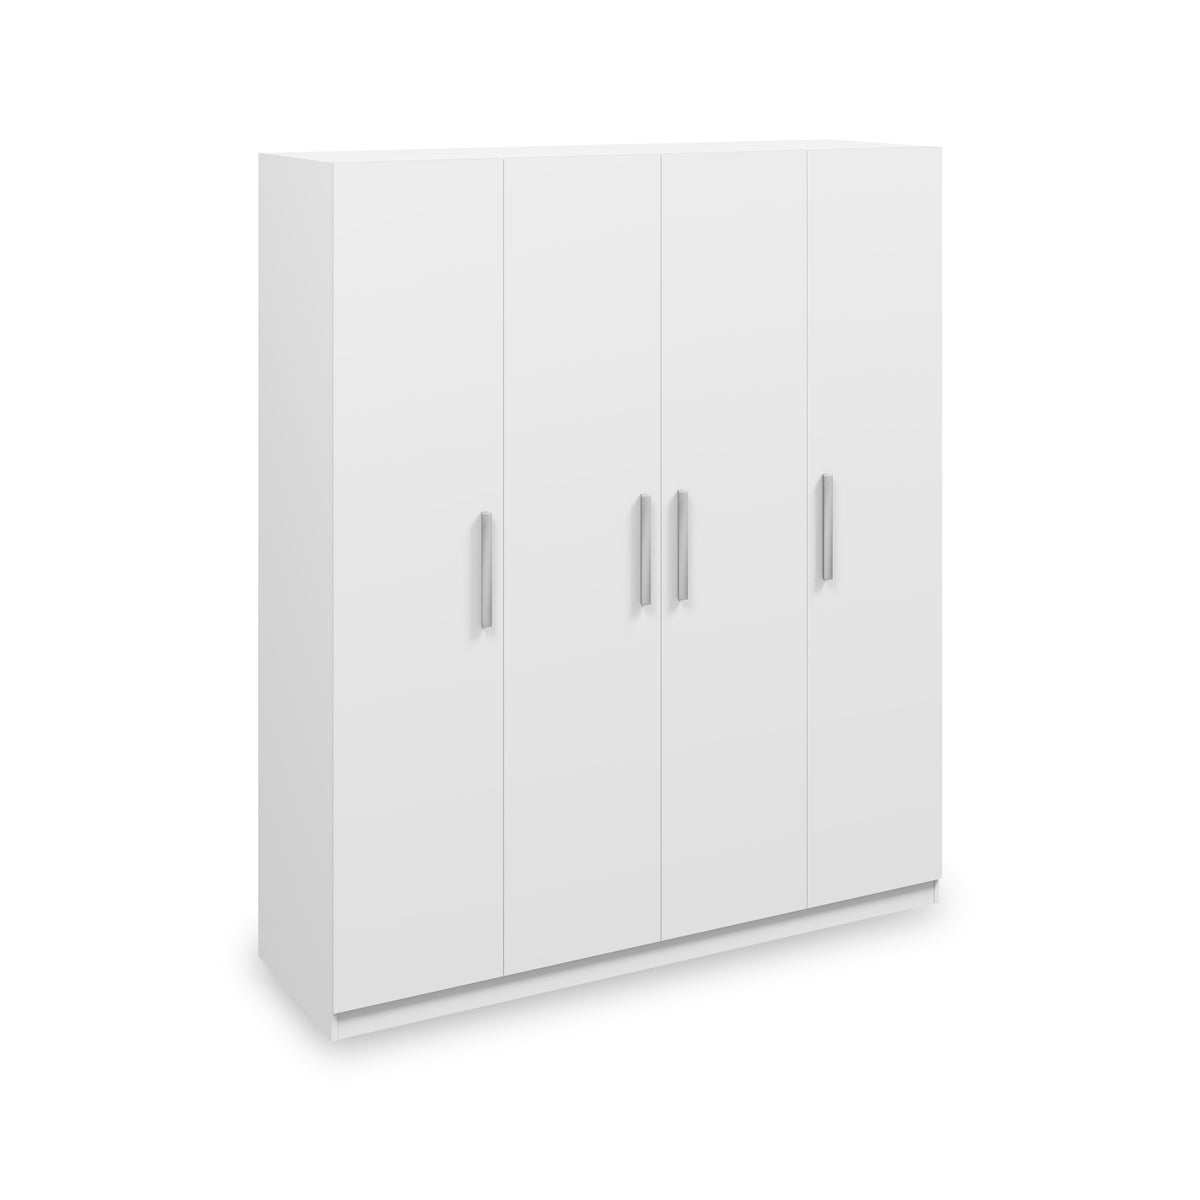 Meribel White 4 Door Wardrobe from Roseland Furniture